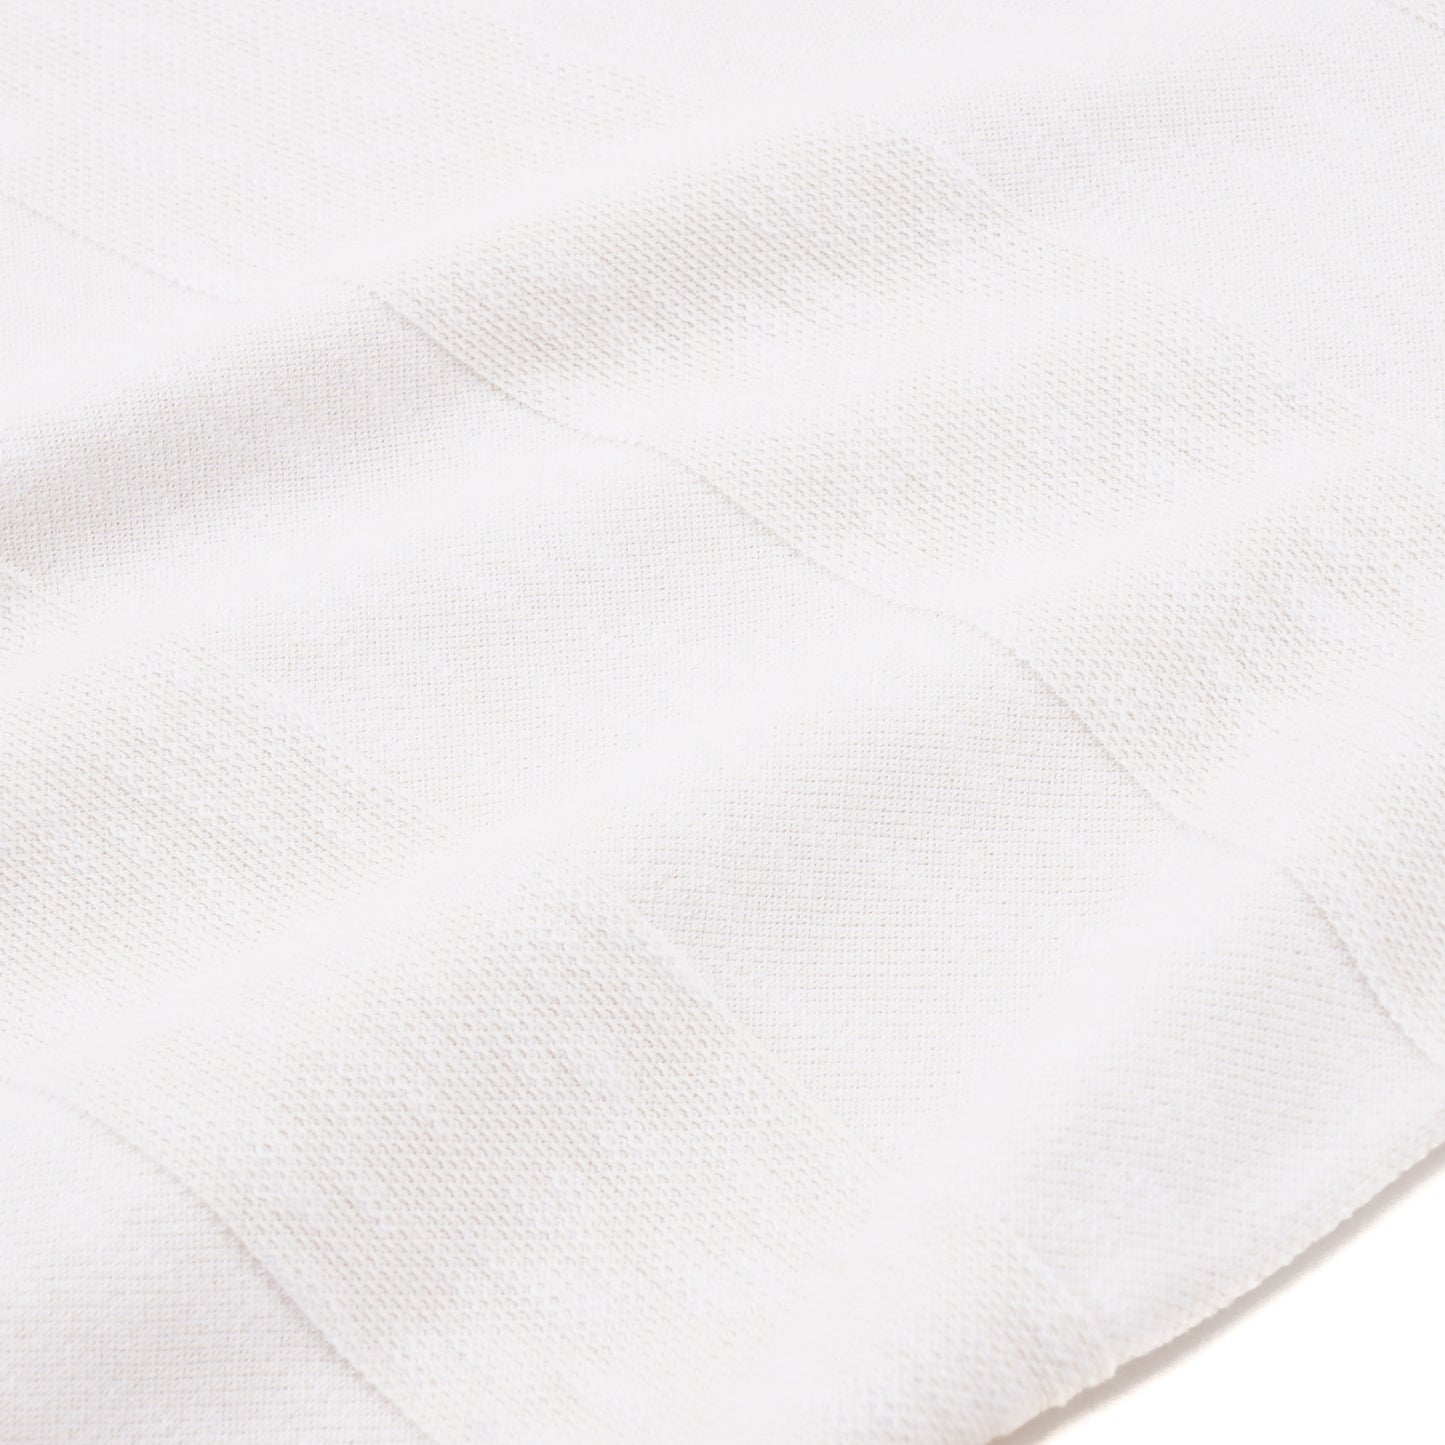 Peserico Knit Block Stripe Cotton Sweater - Top Shelf Apparel